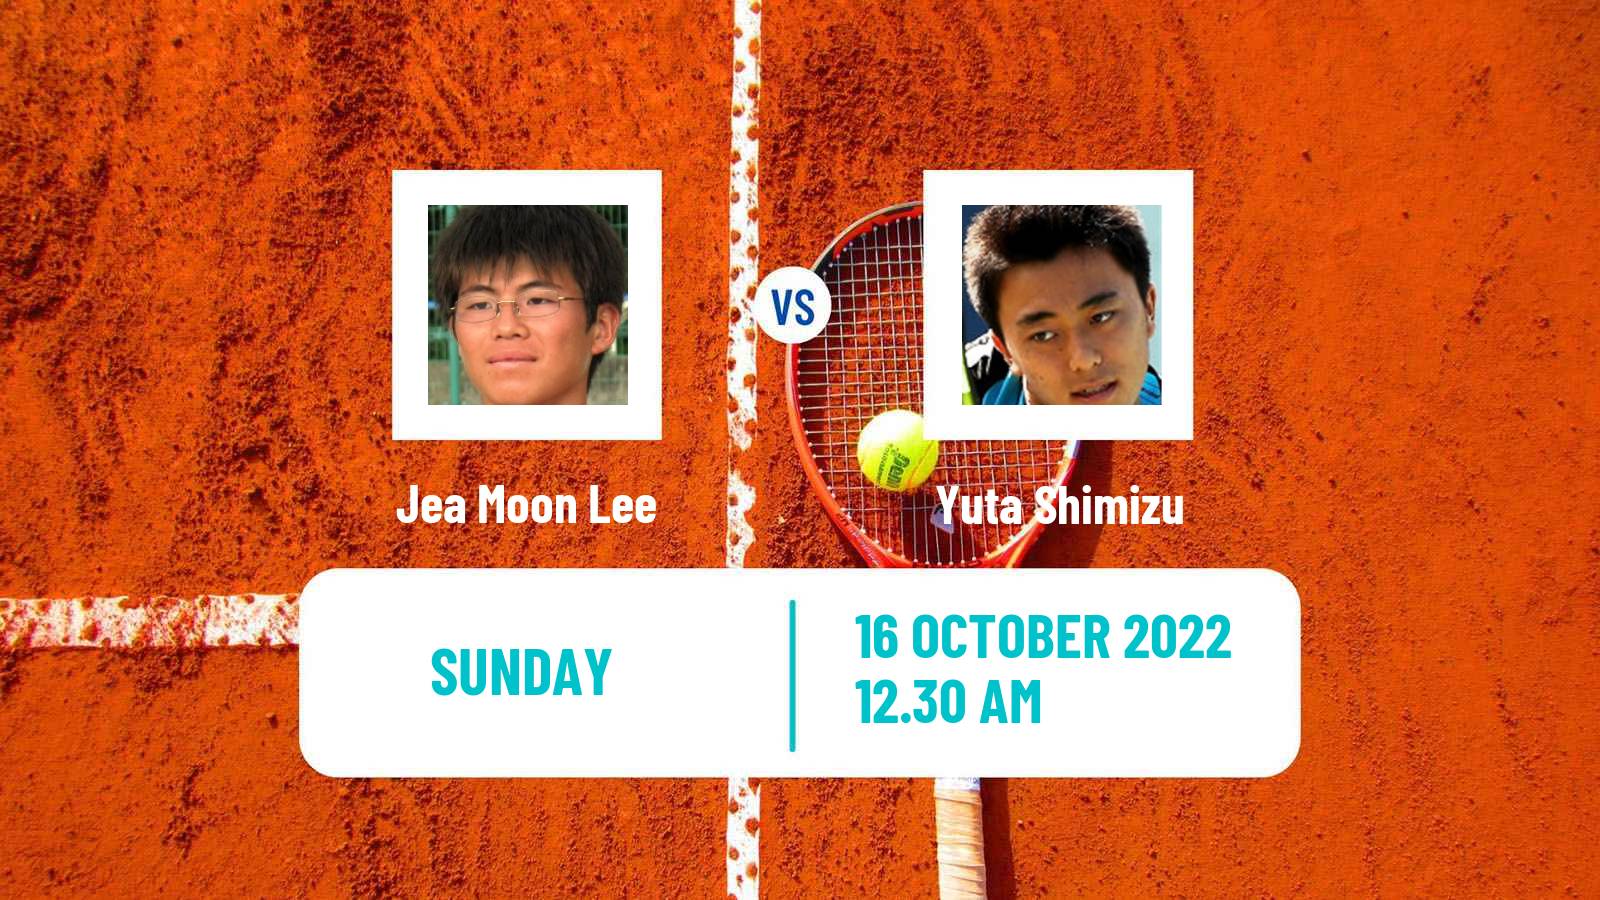 Tennis ATP Challenger Jea Moon Lee - Yuta Shimizu